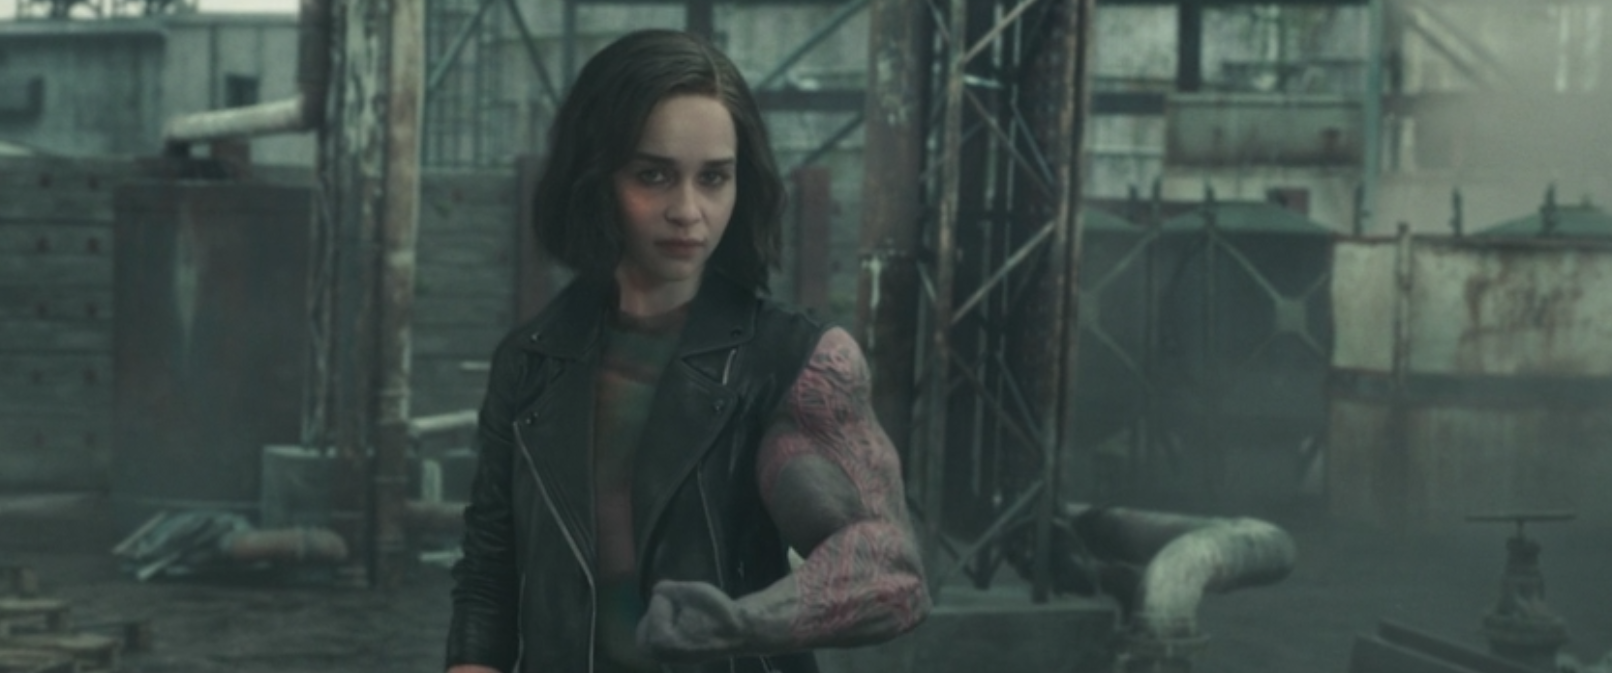 Rumor: Emilia Clarke's Super Skrull Gi'ah To Lead A Group Of British  Superheroes - Bounding Into Comics